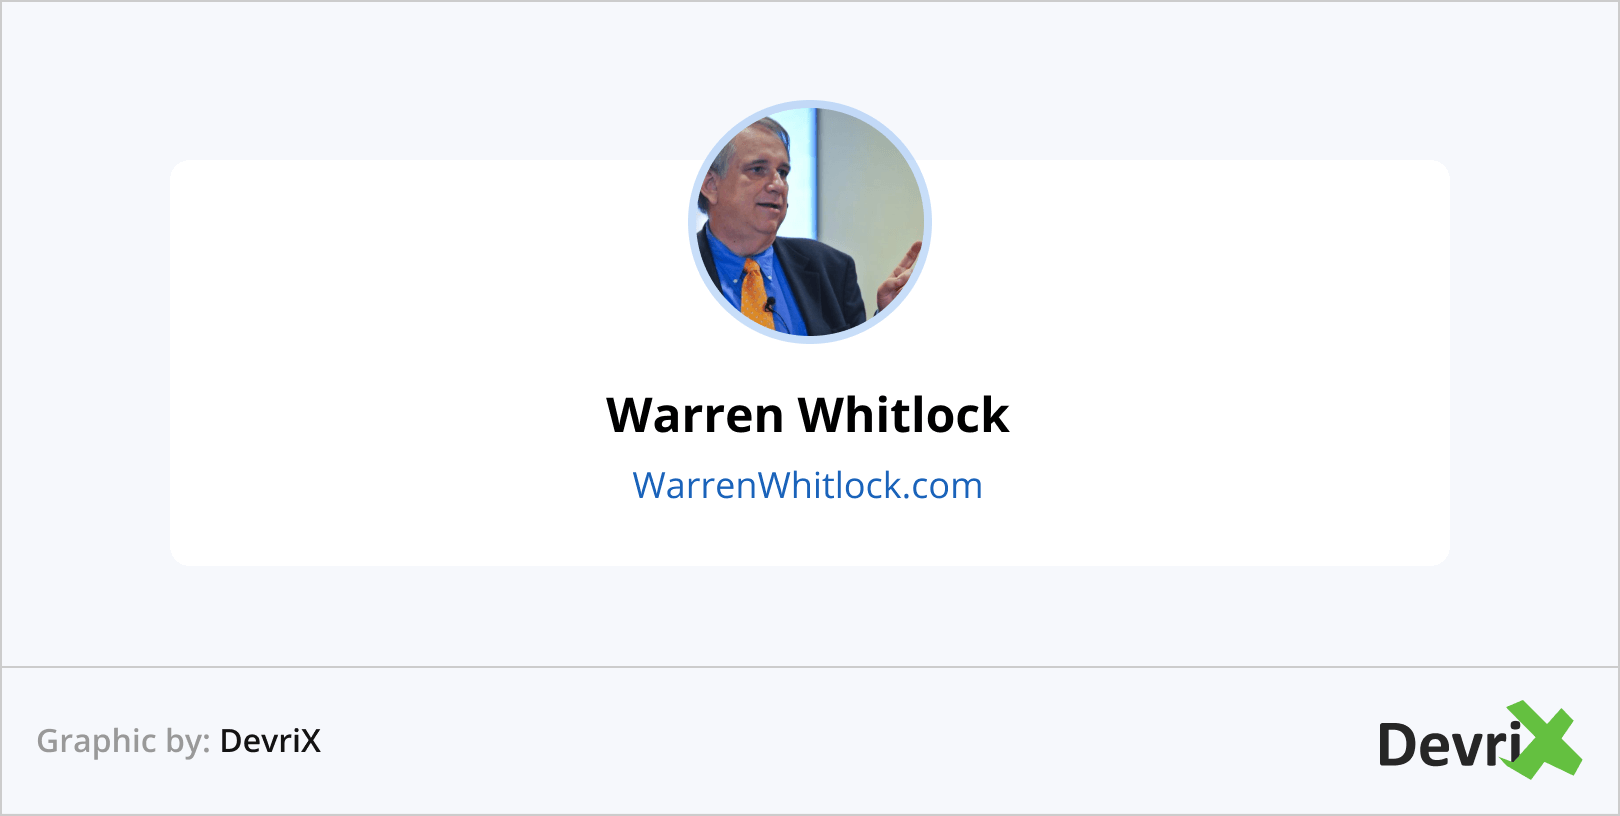 Warren Whitlock